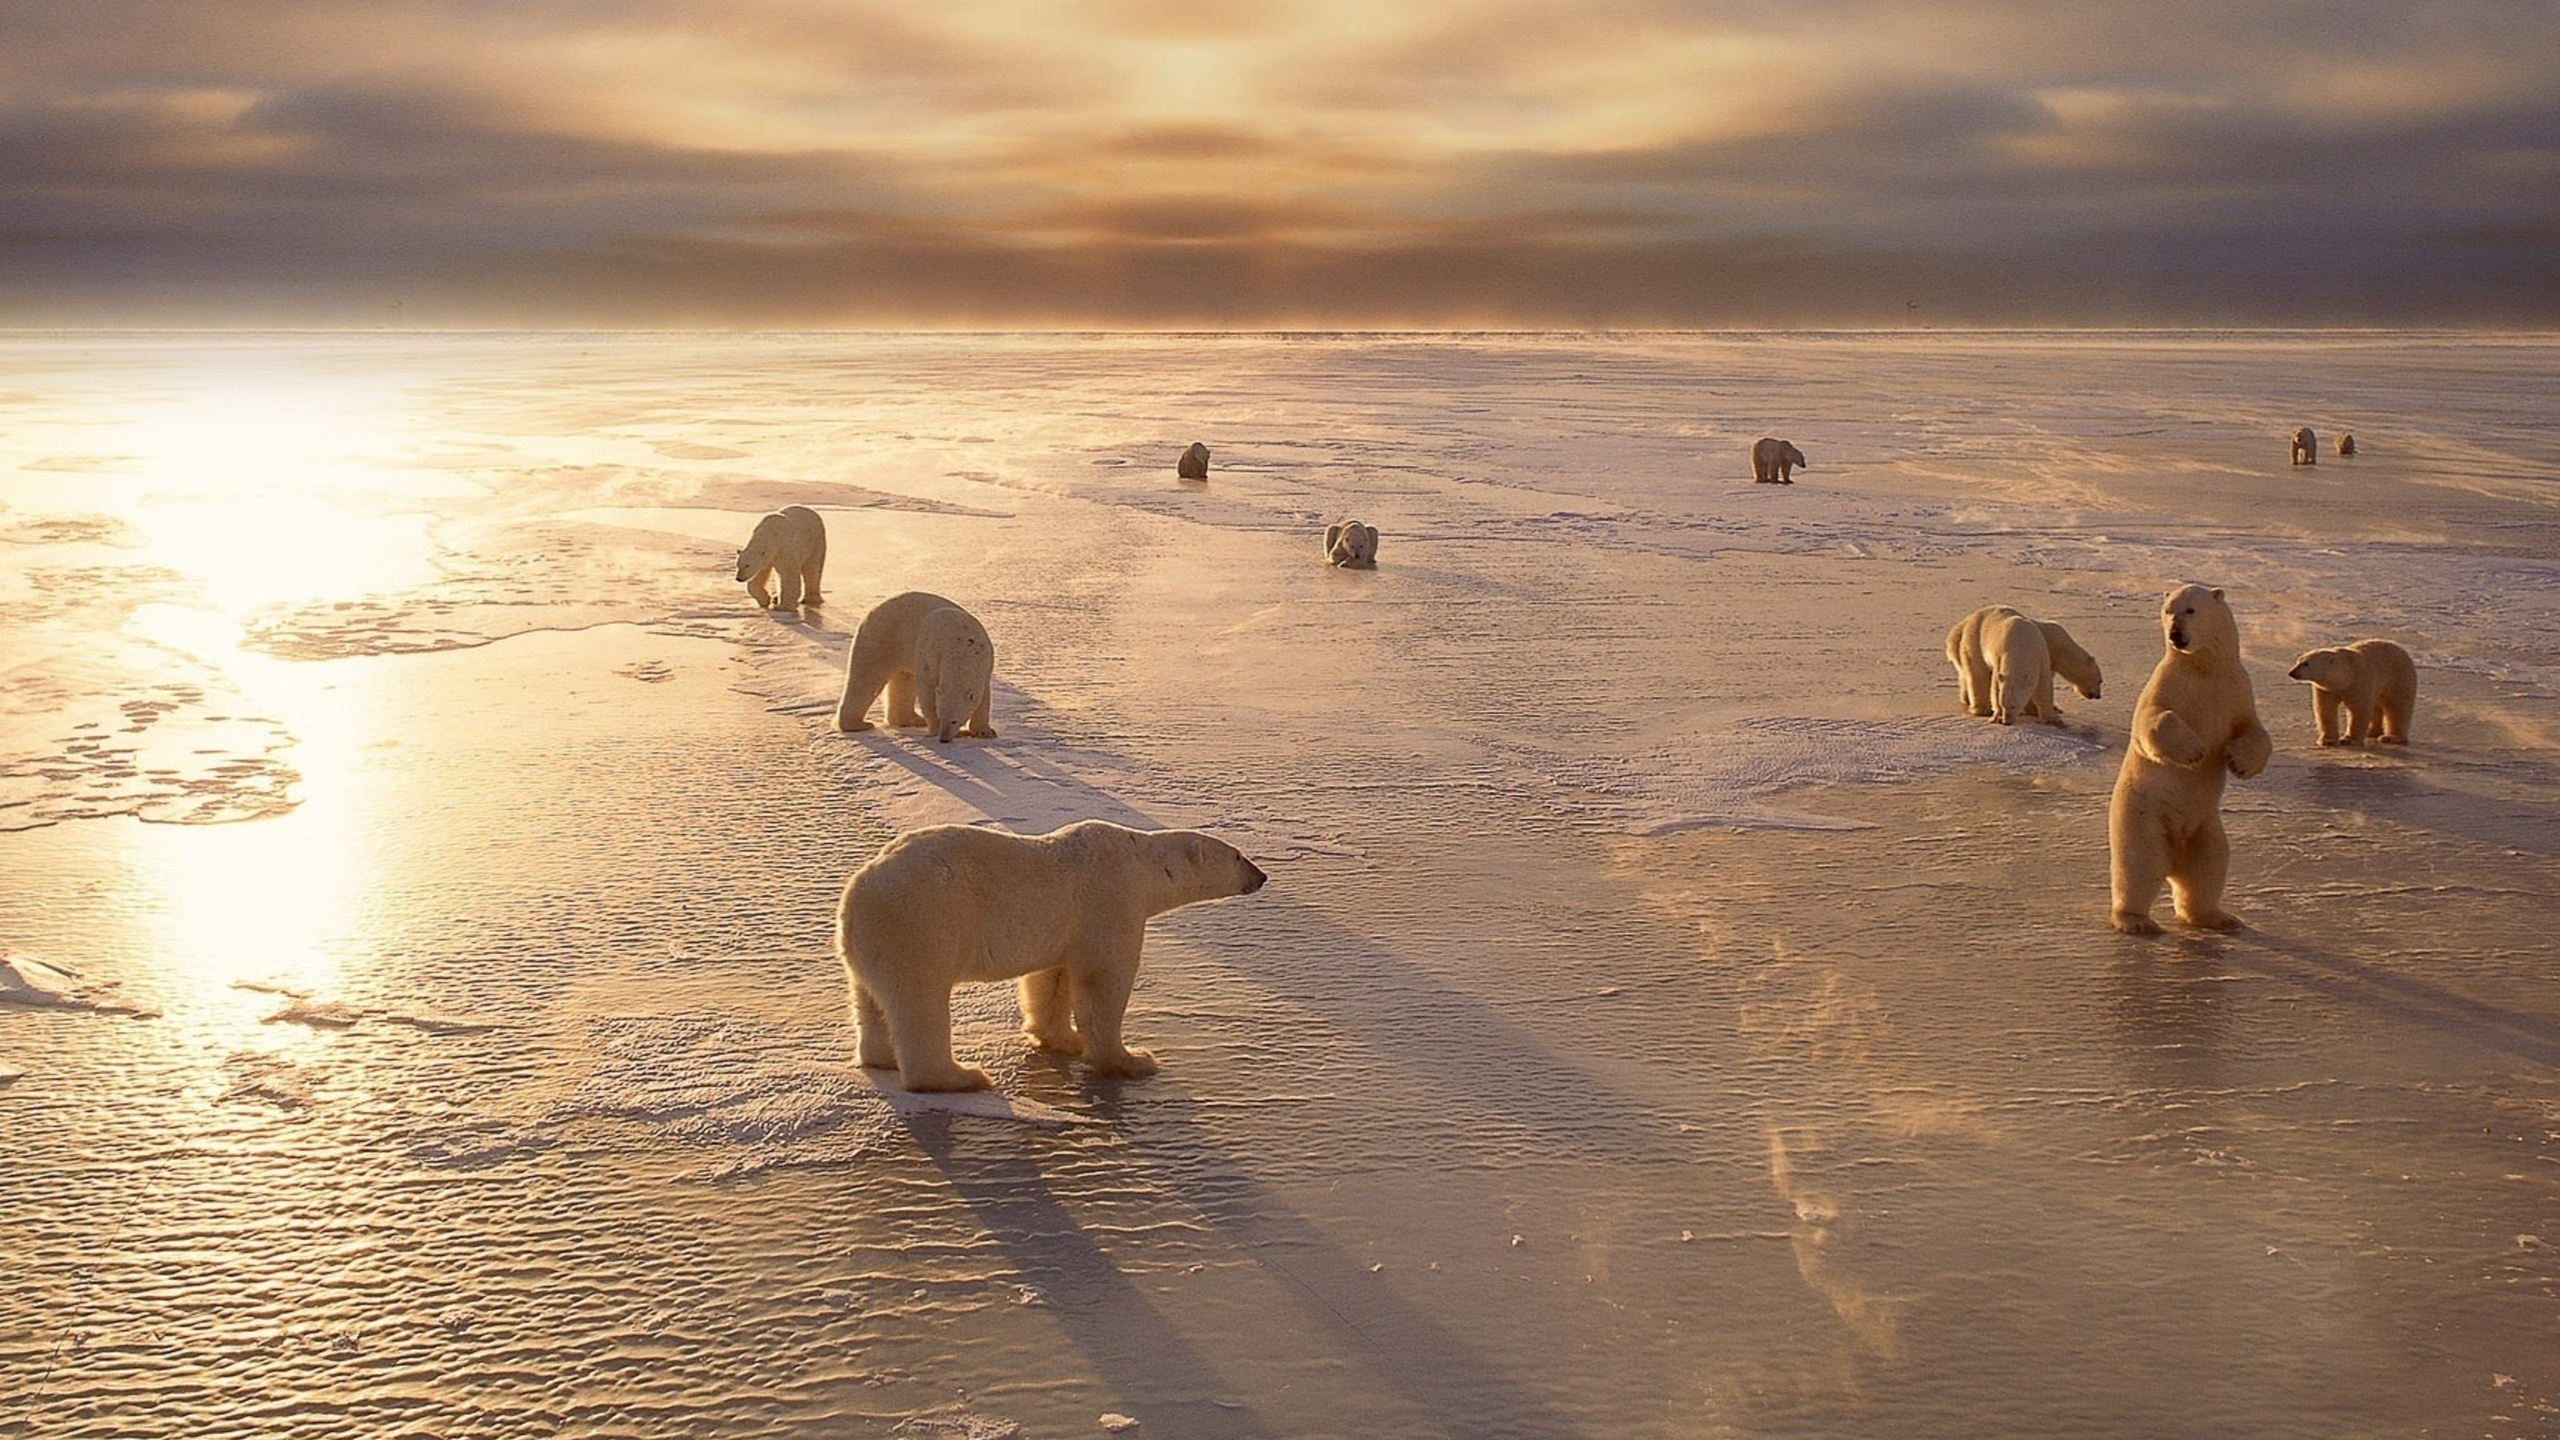 White Polar Bear on Brown Sand During Daytime. Wallpaper in 2560x1440 Resolution